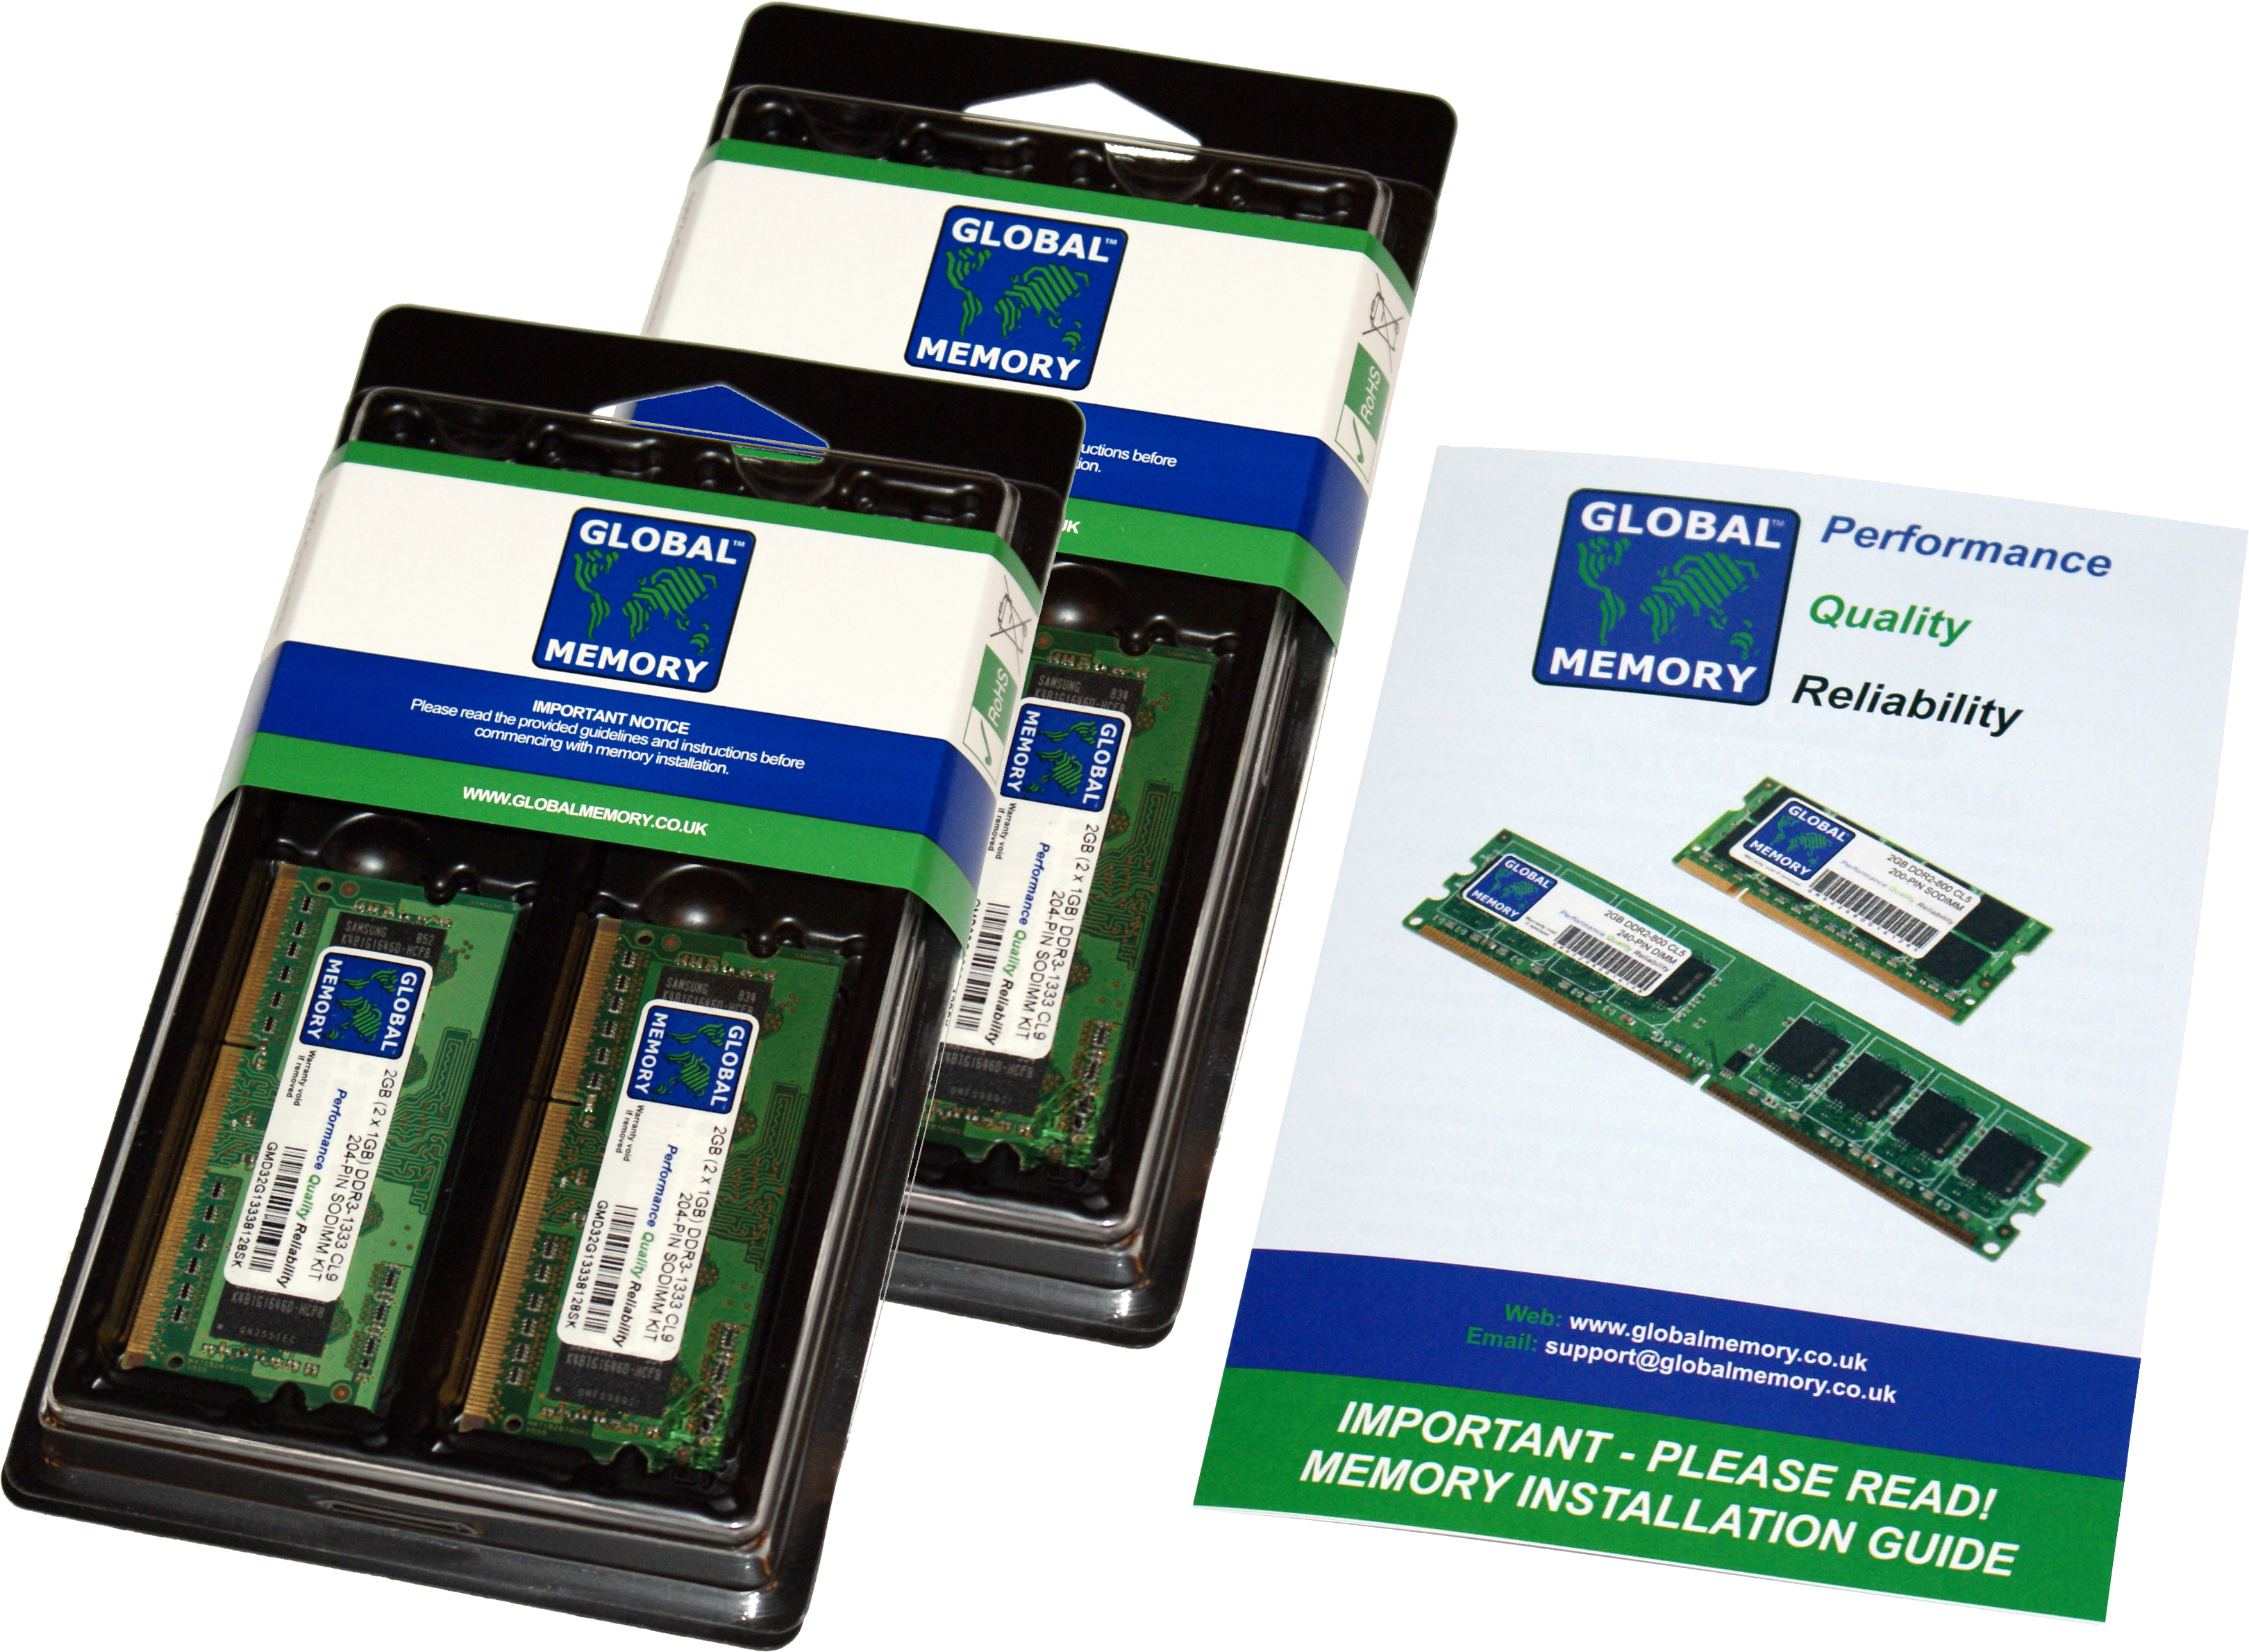 16GB (4 x 4GB) DDR4 2400MHz PC4-19200 260-PIN SODIMM MEMORY RAM KIT FOR ACER LAPTOPS/NOTEBOOKS